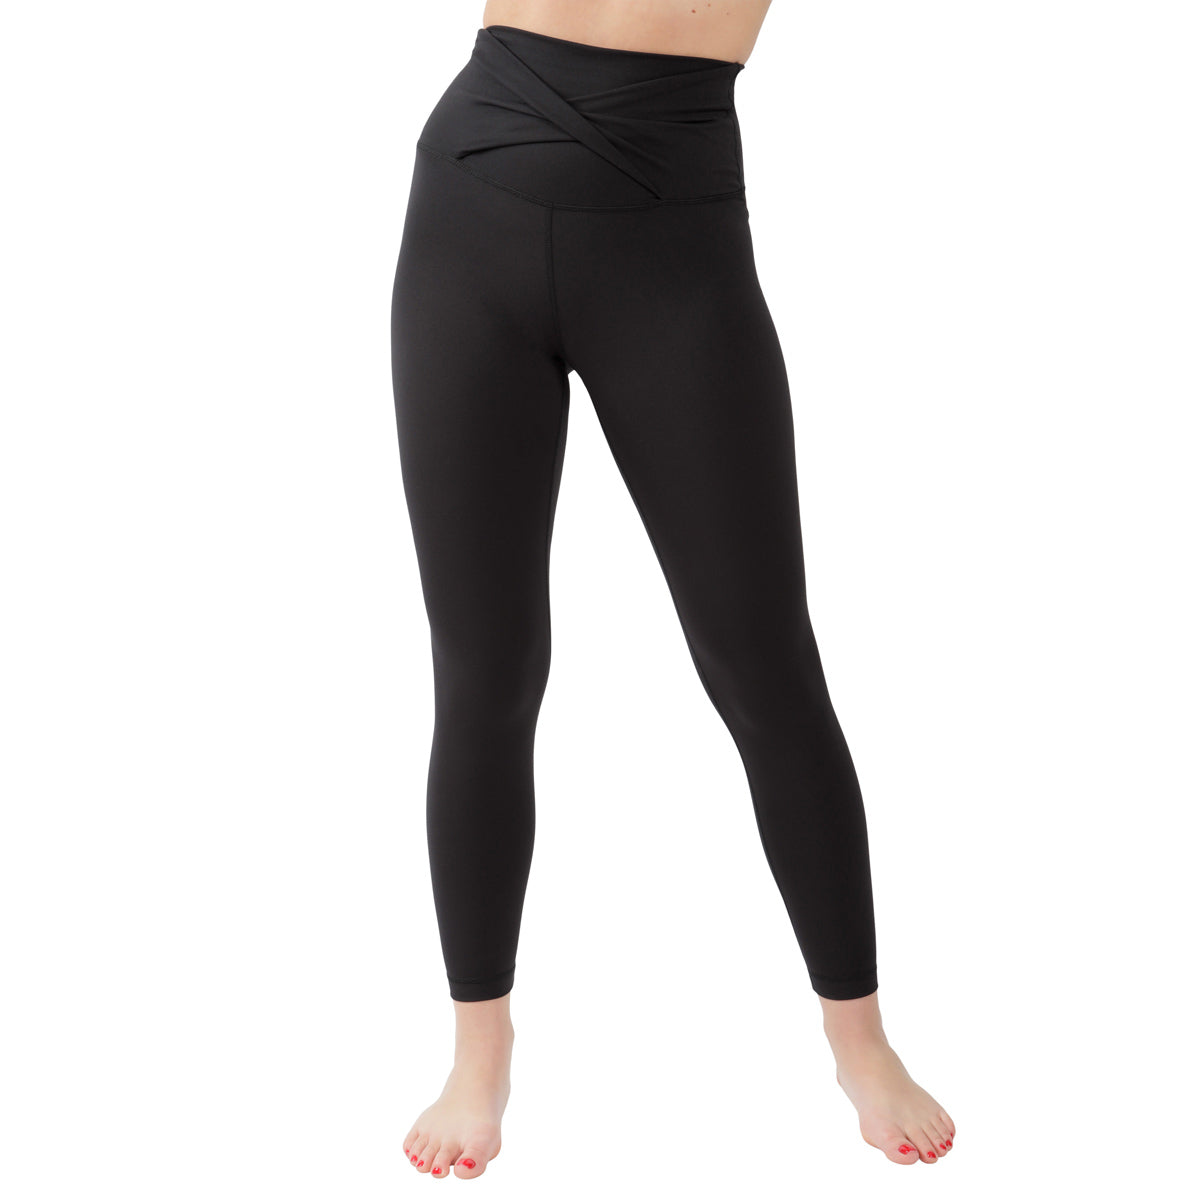 Yogalicious Lux Women's Athletic Yoga Pants Stretch Camo Black